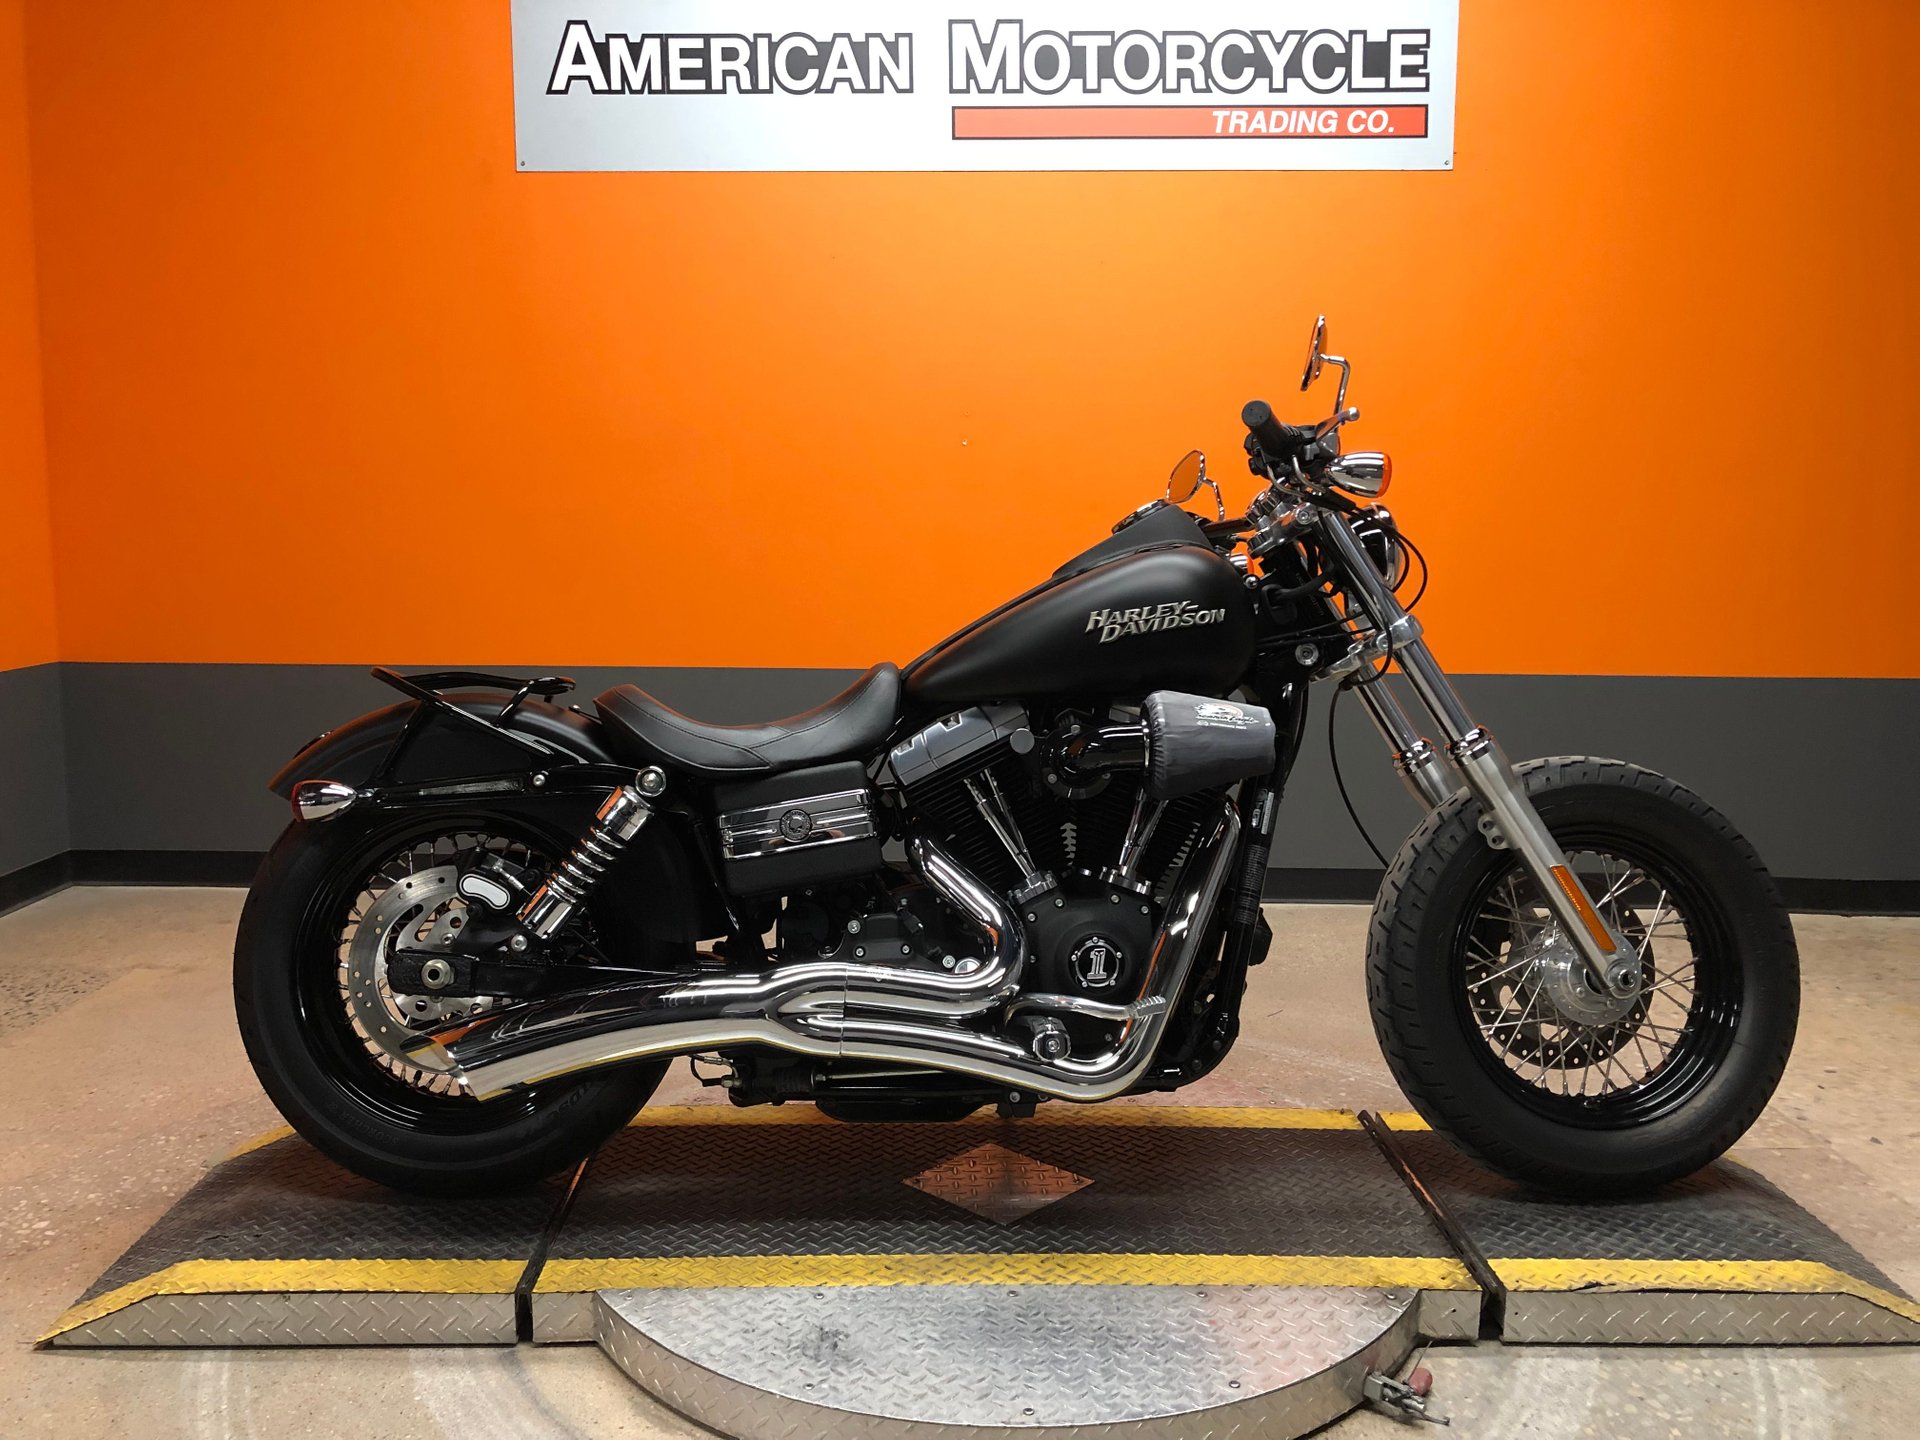 2010 Harley-Davidson Dyna Fat Bob | American Motorcycle Trading Company -  Used Harley Davidson Motorcycles